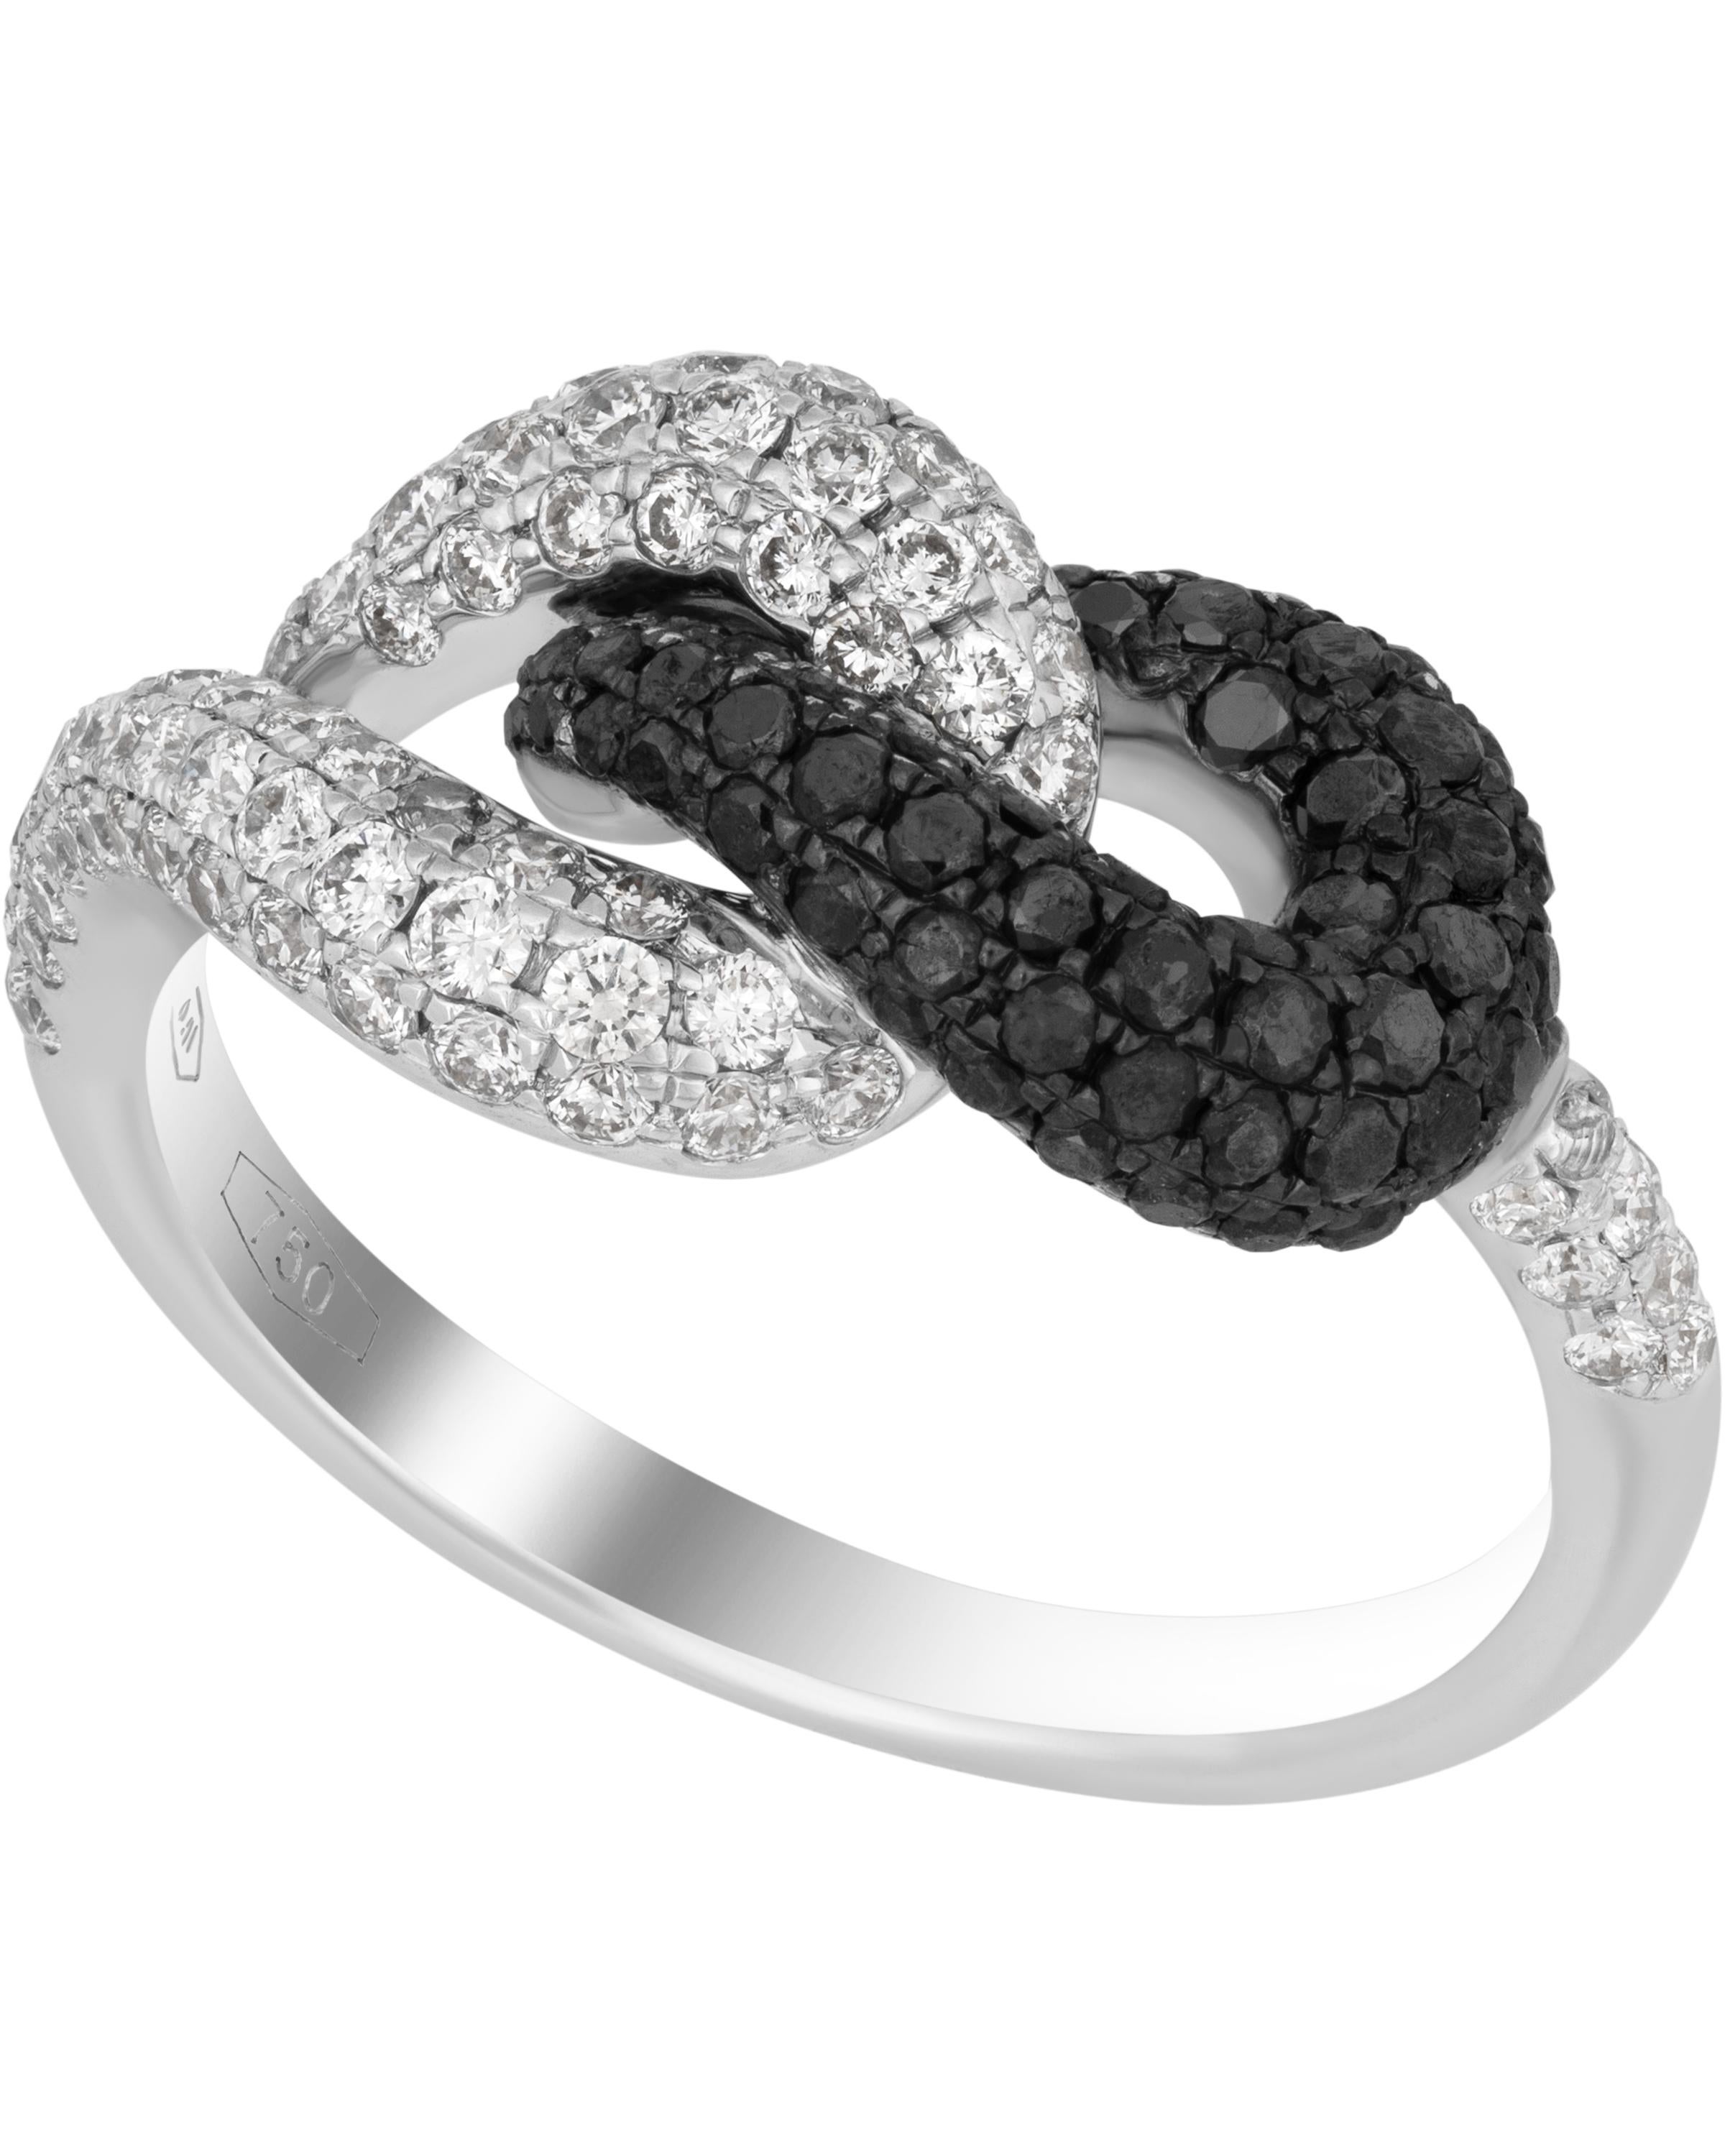 Contemporary Piero Milano 18K White and Black Gold, Diamond Ring Sz 6 For Sale